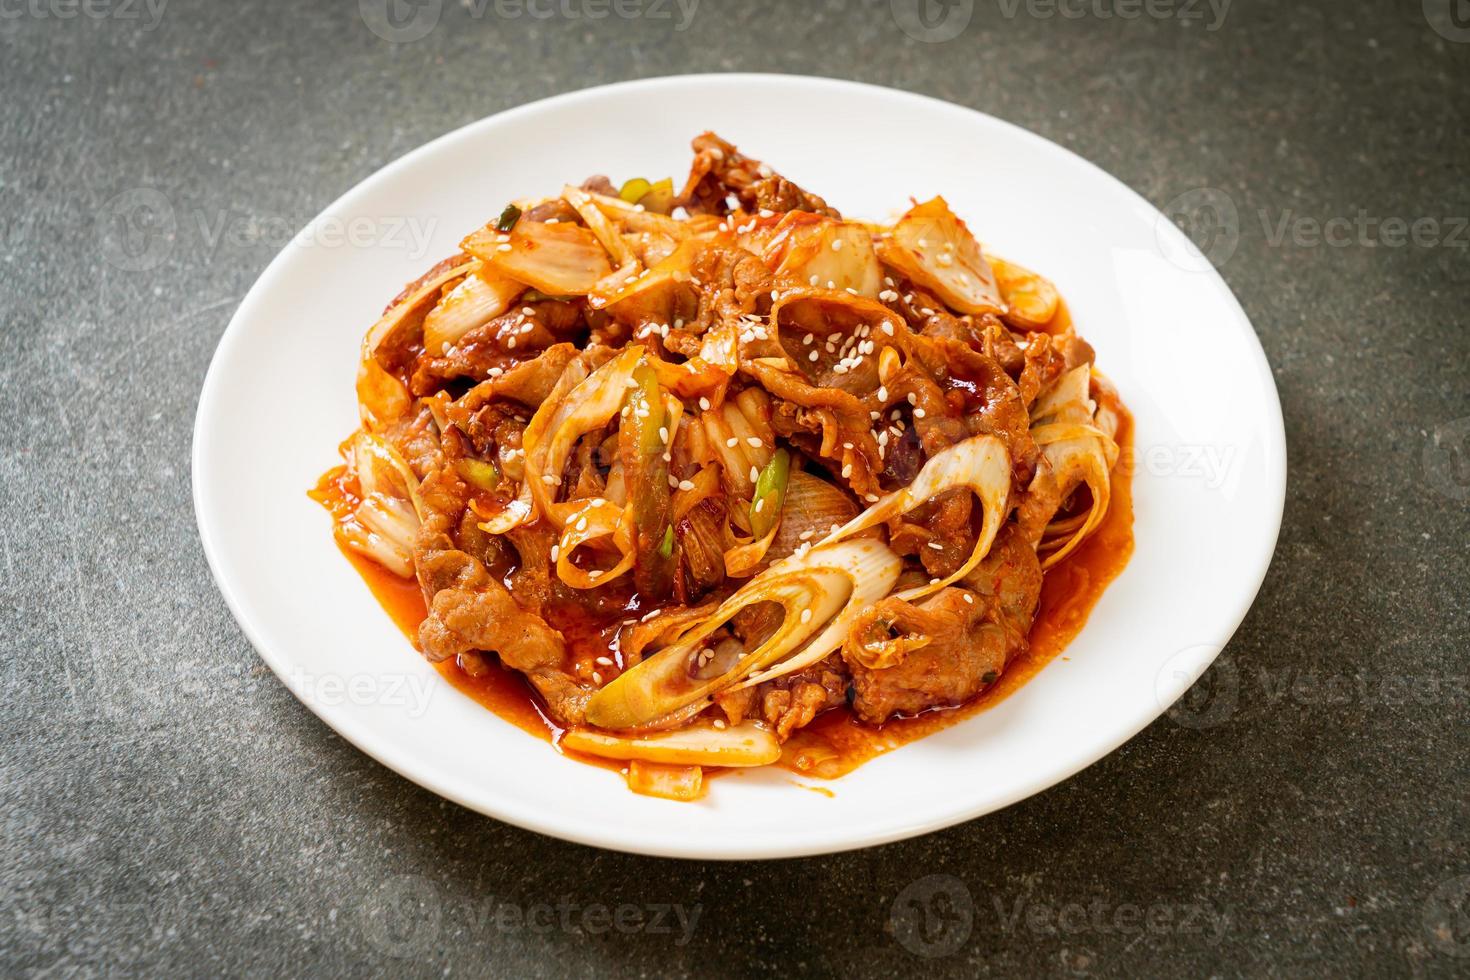 Carne de porco frita com pasta picante coreana e kimchi - comida ao estilo coreano foto